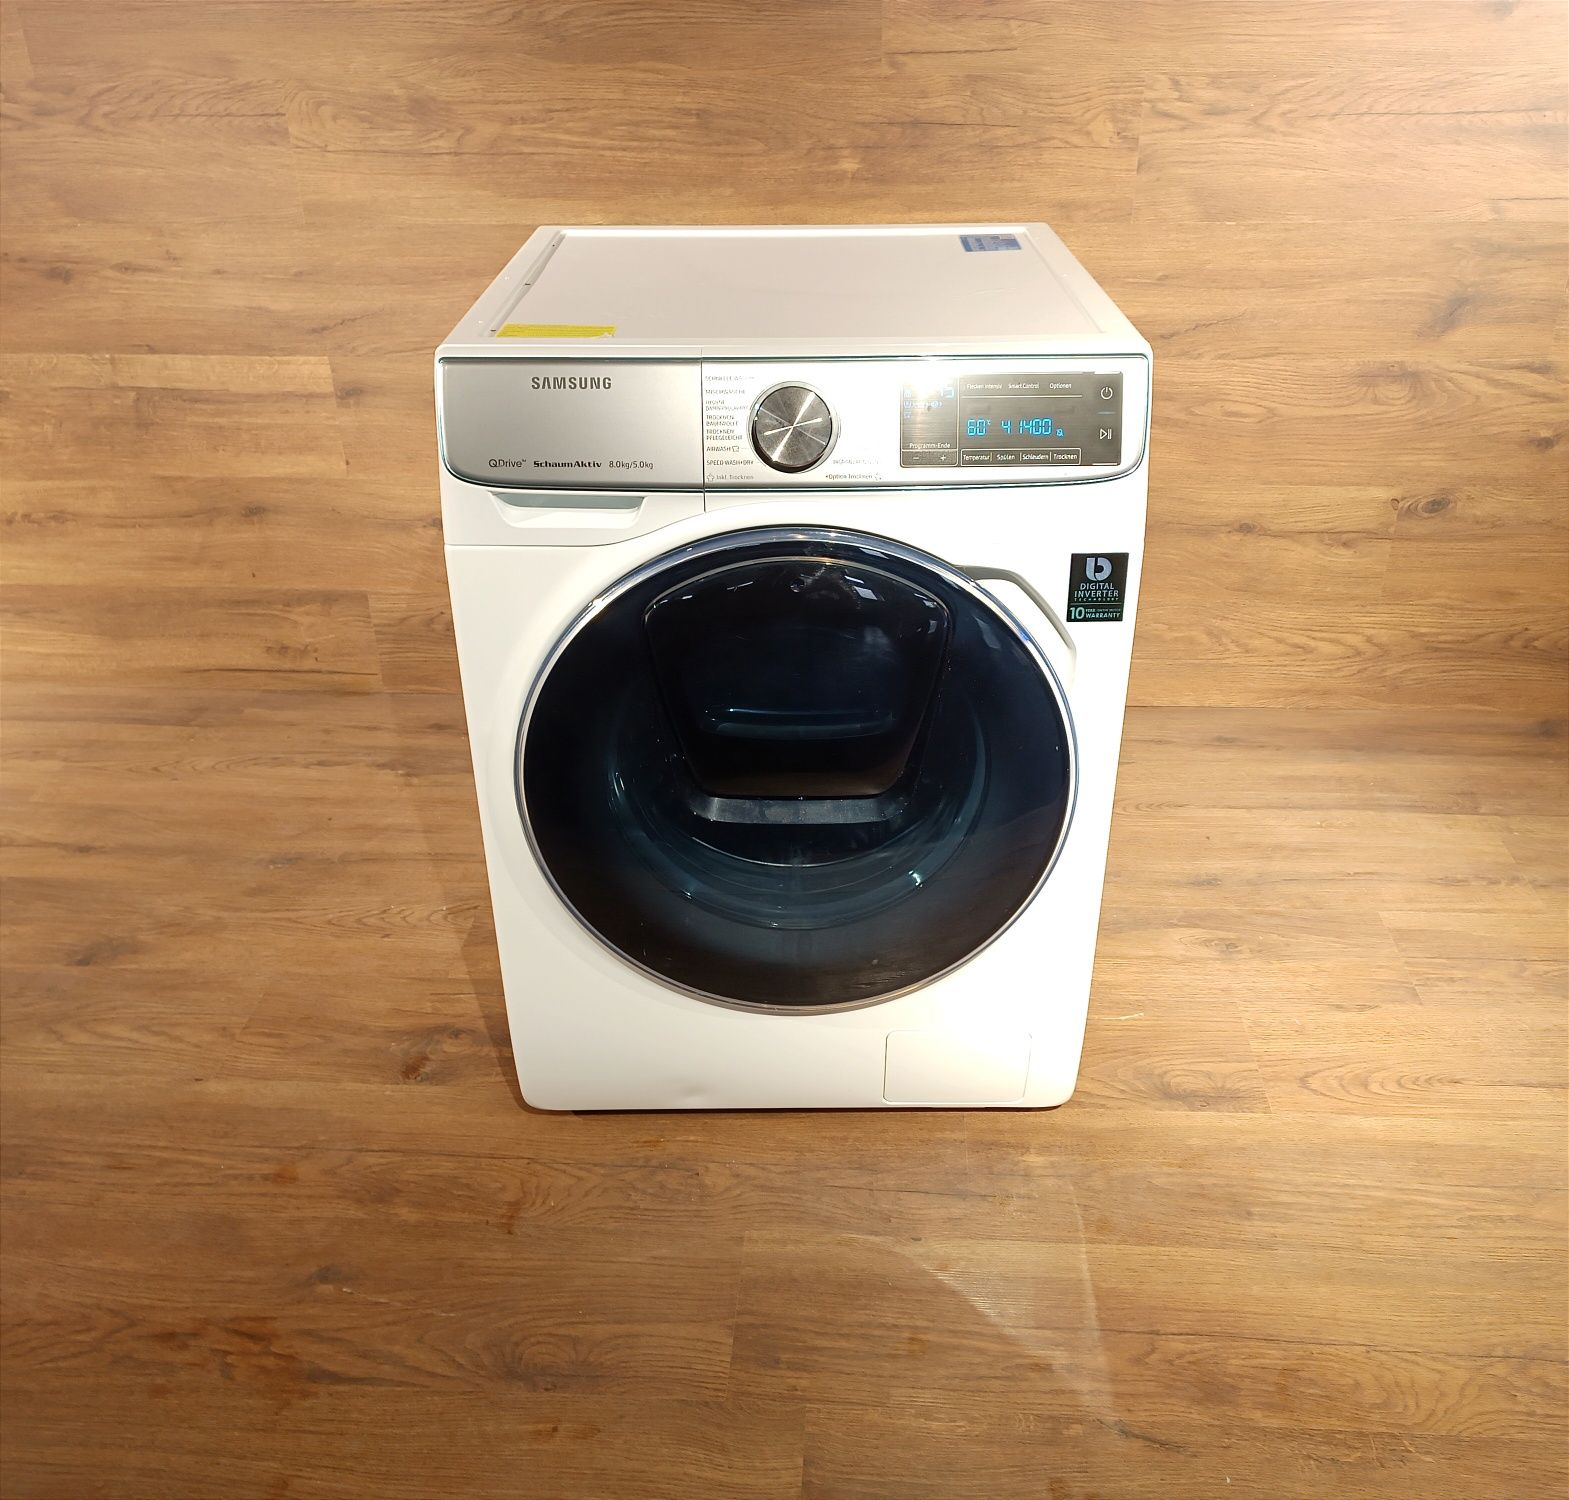 Пральна/стиральная машина з сушкою 2в1 Samsung ідеал гарантія доставка